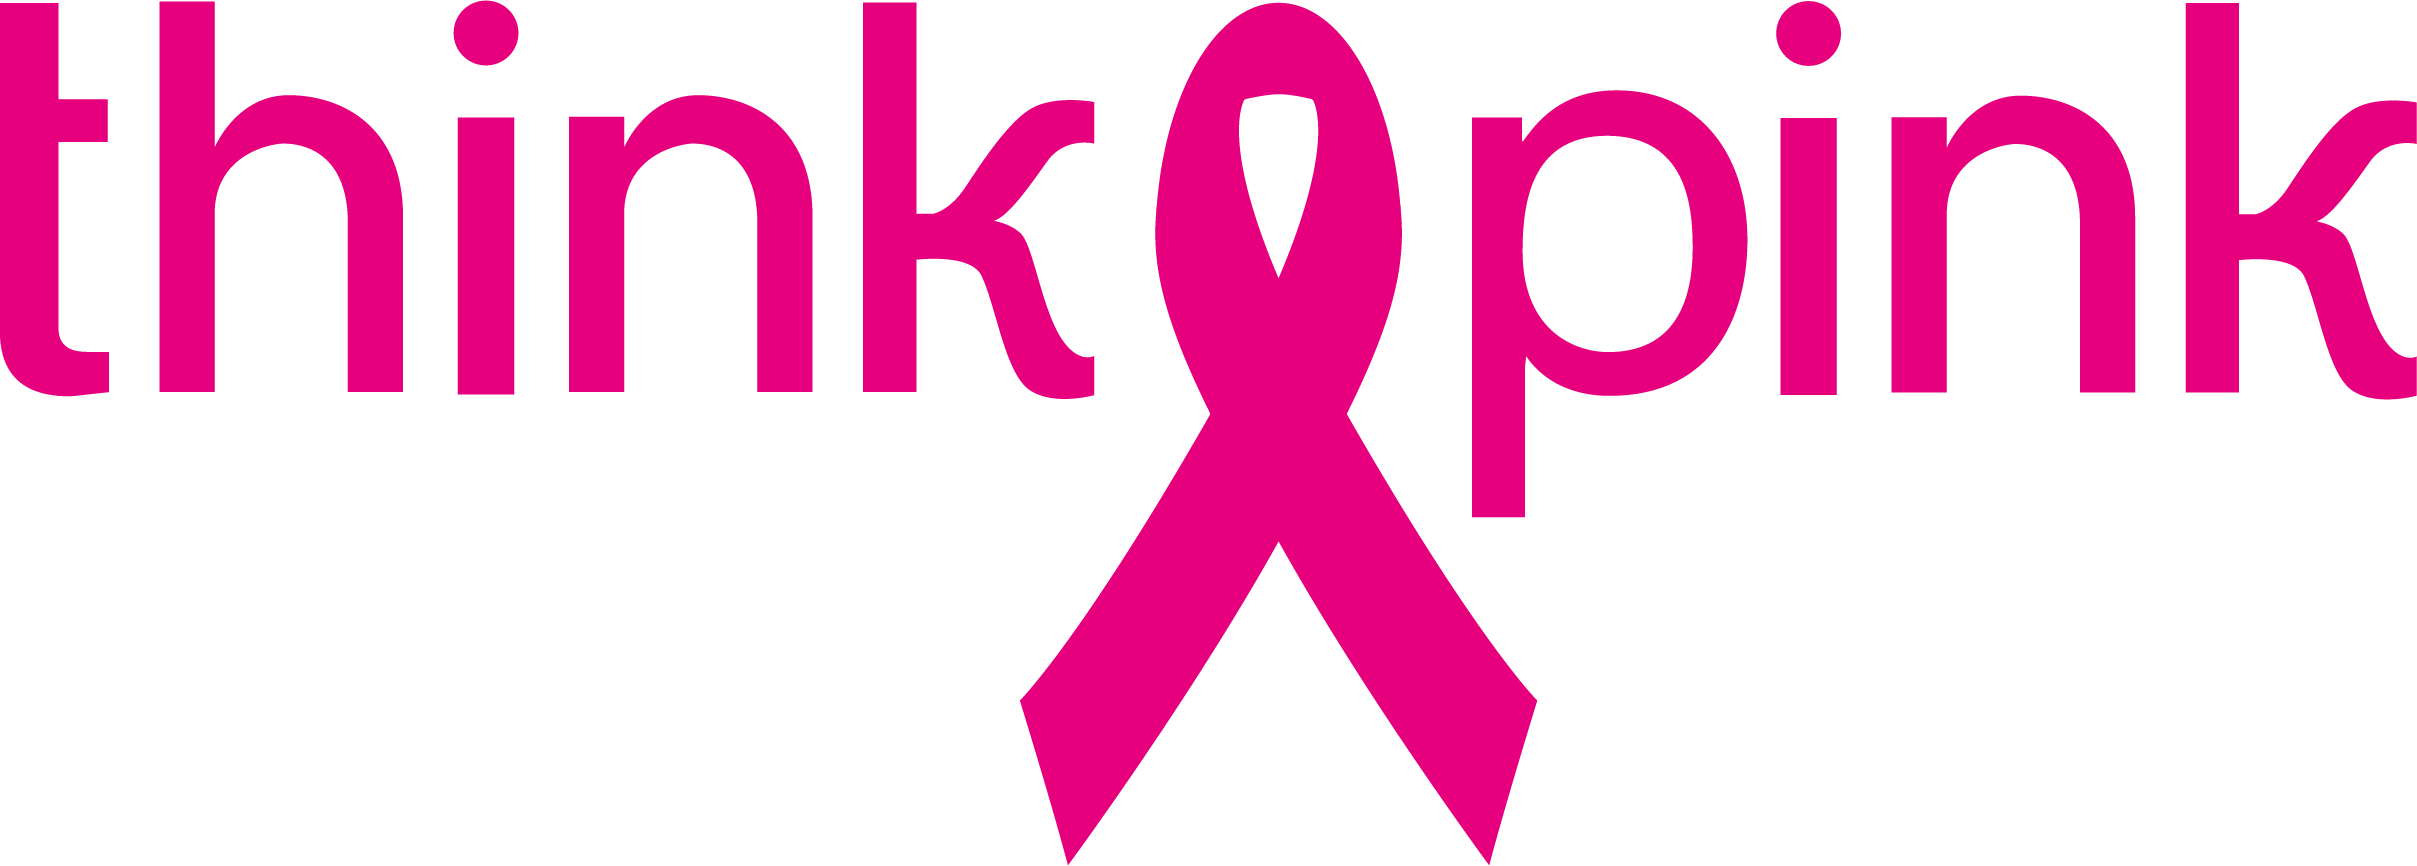 Think my shop. Think Pink. Розовый логотип. Логотипы розового цвета. Пинк. Раша логотип.